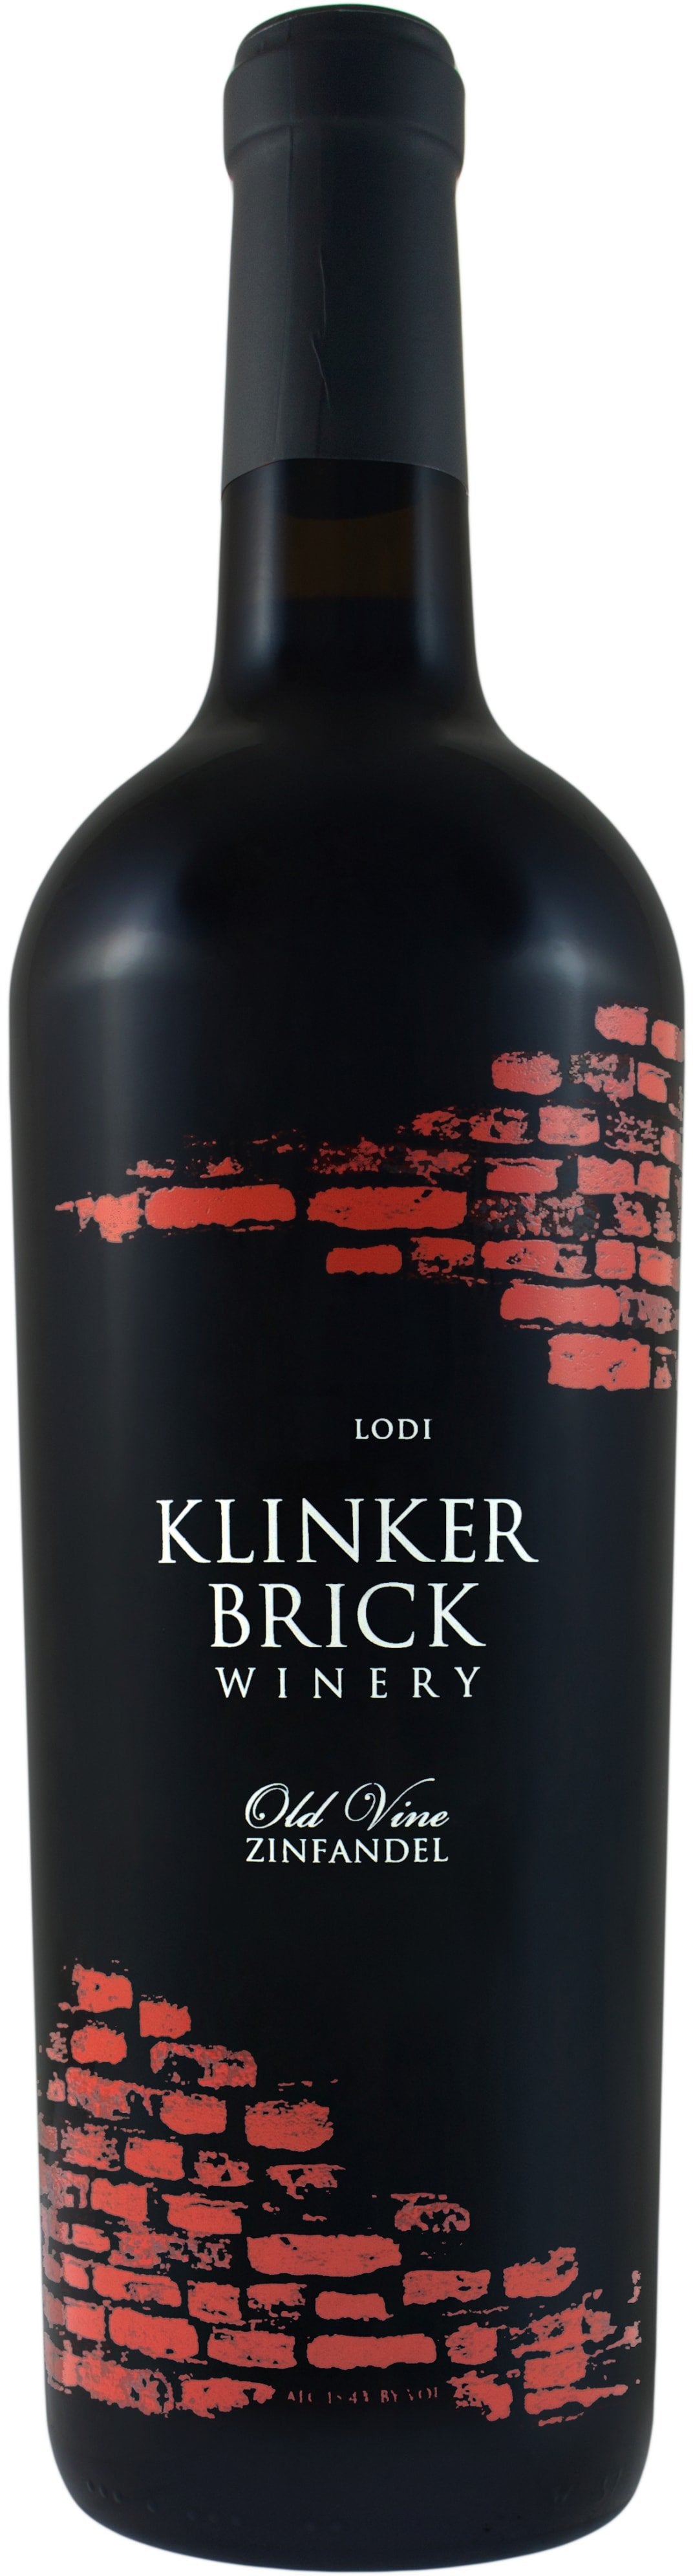 Klinker Brick Zinfandel Old Vine Marisa Vineyard 2016